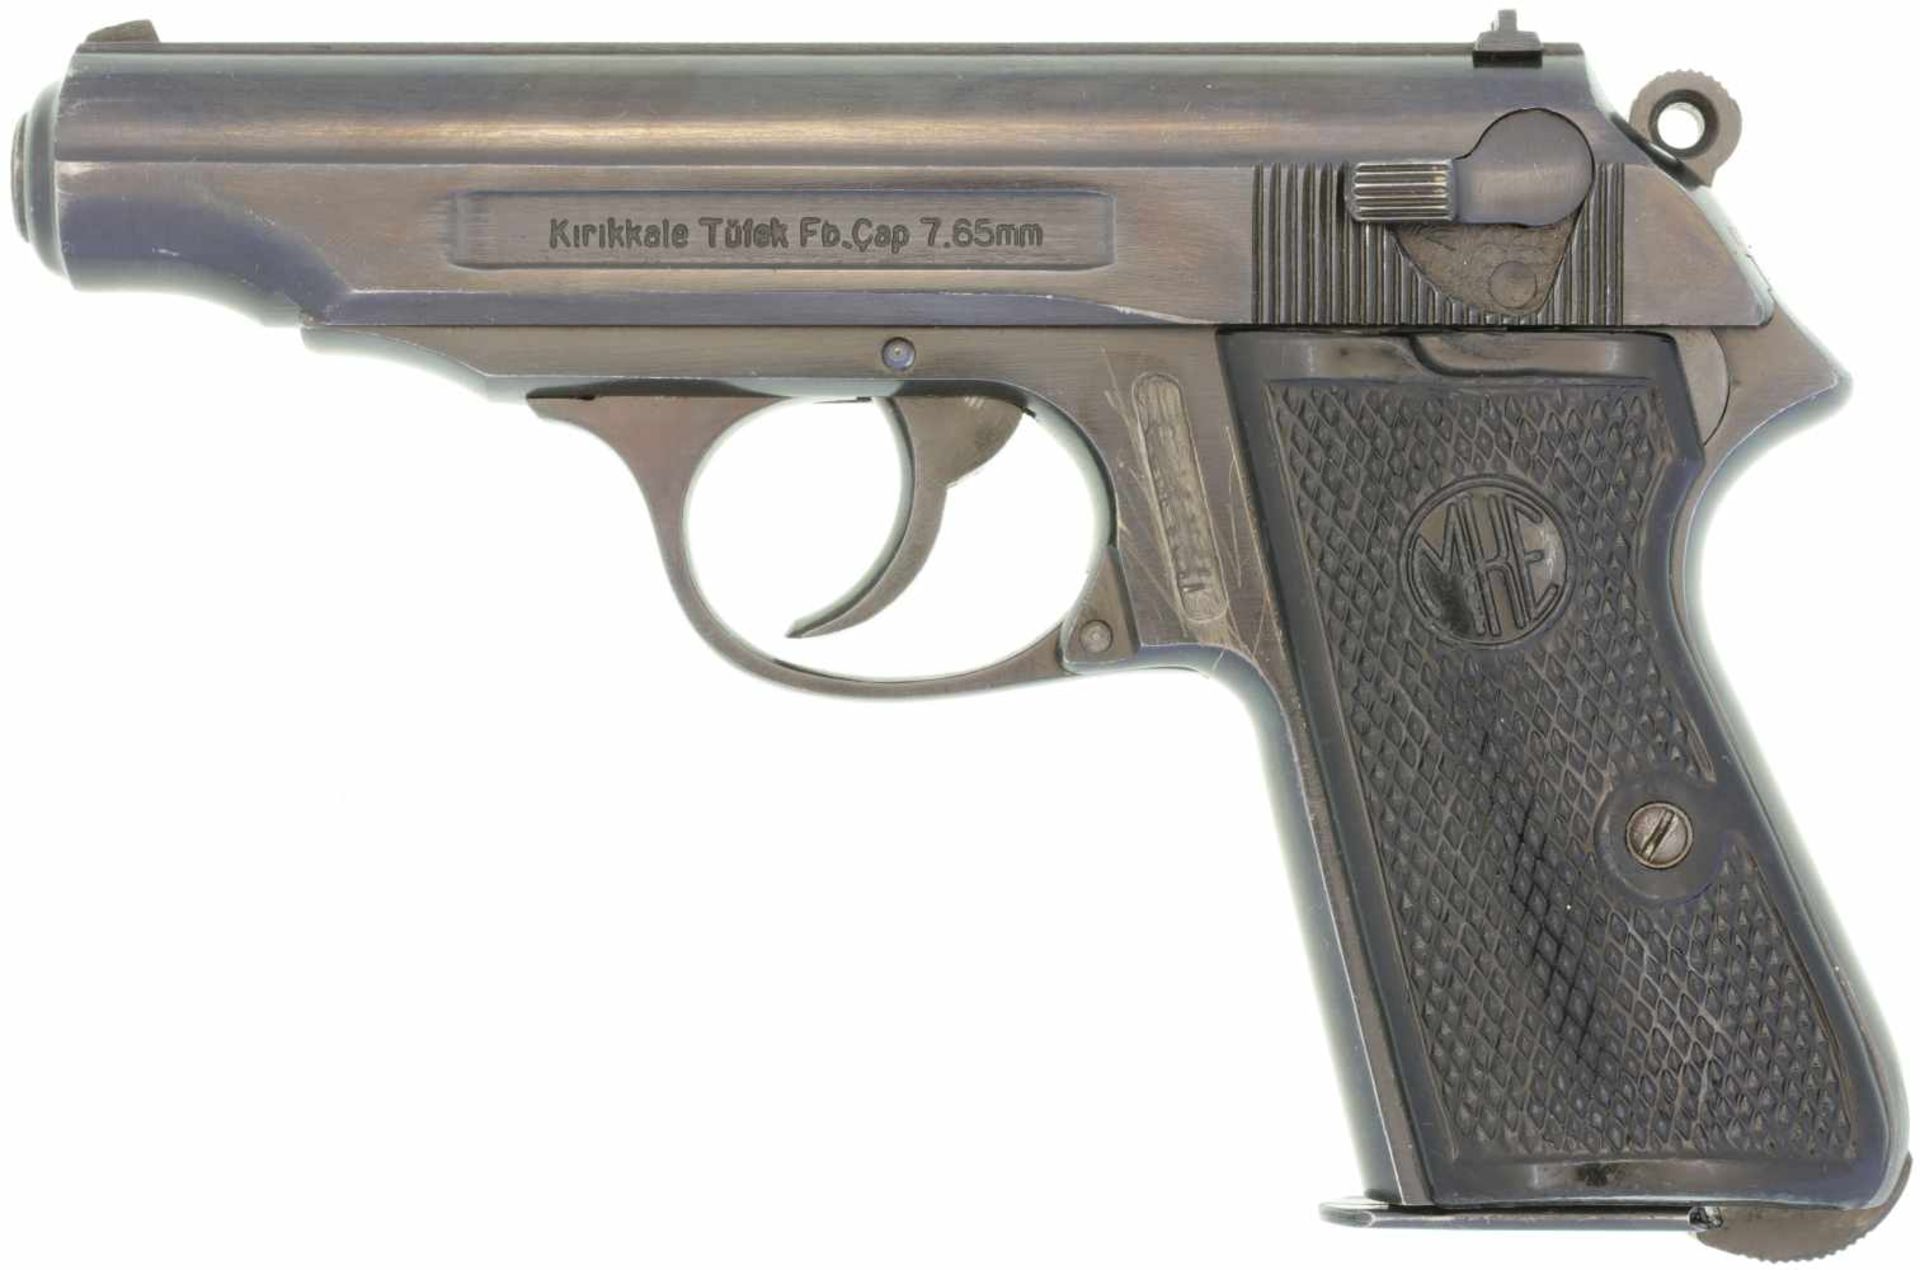 Pistole, M.K.E. Kirikale, türkischer Klon der Walther PP, Kal.7.65mm LL 96mm, brünierte